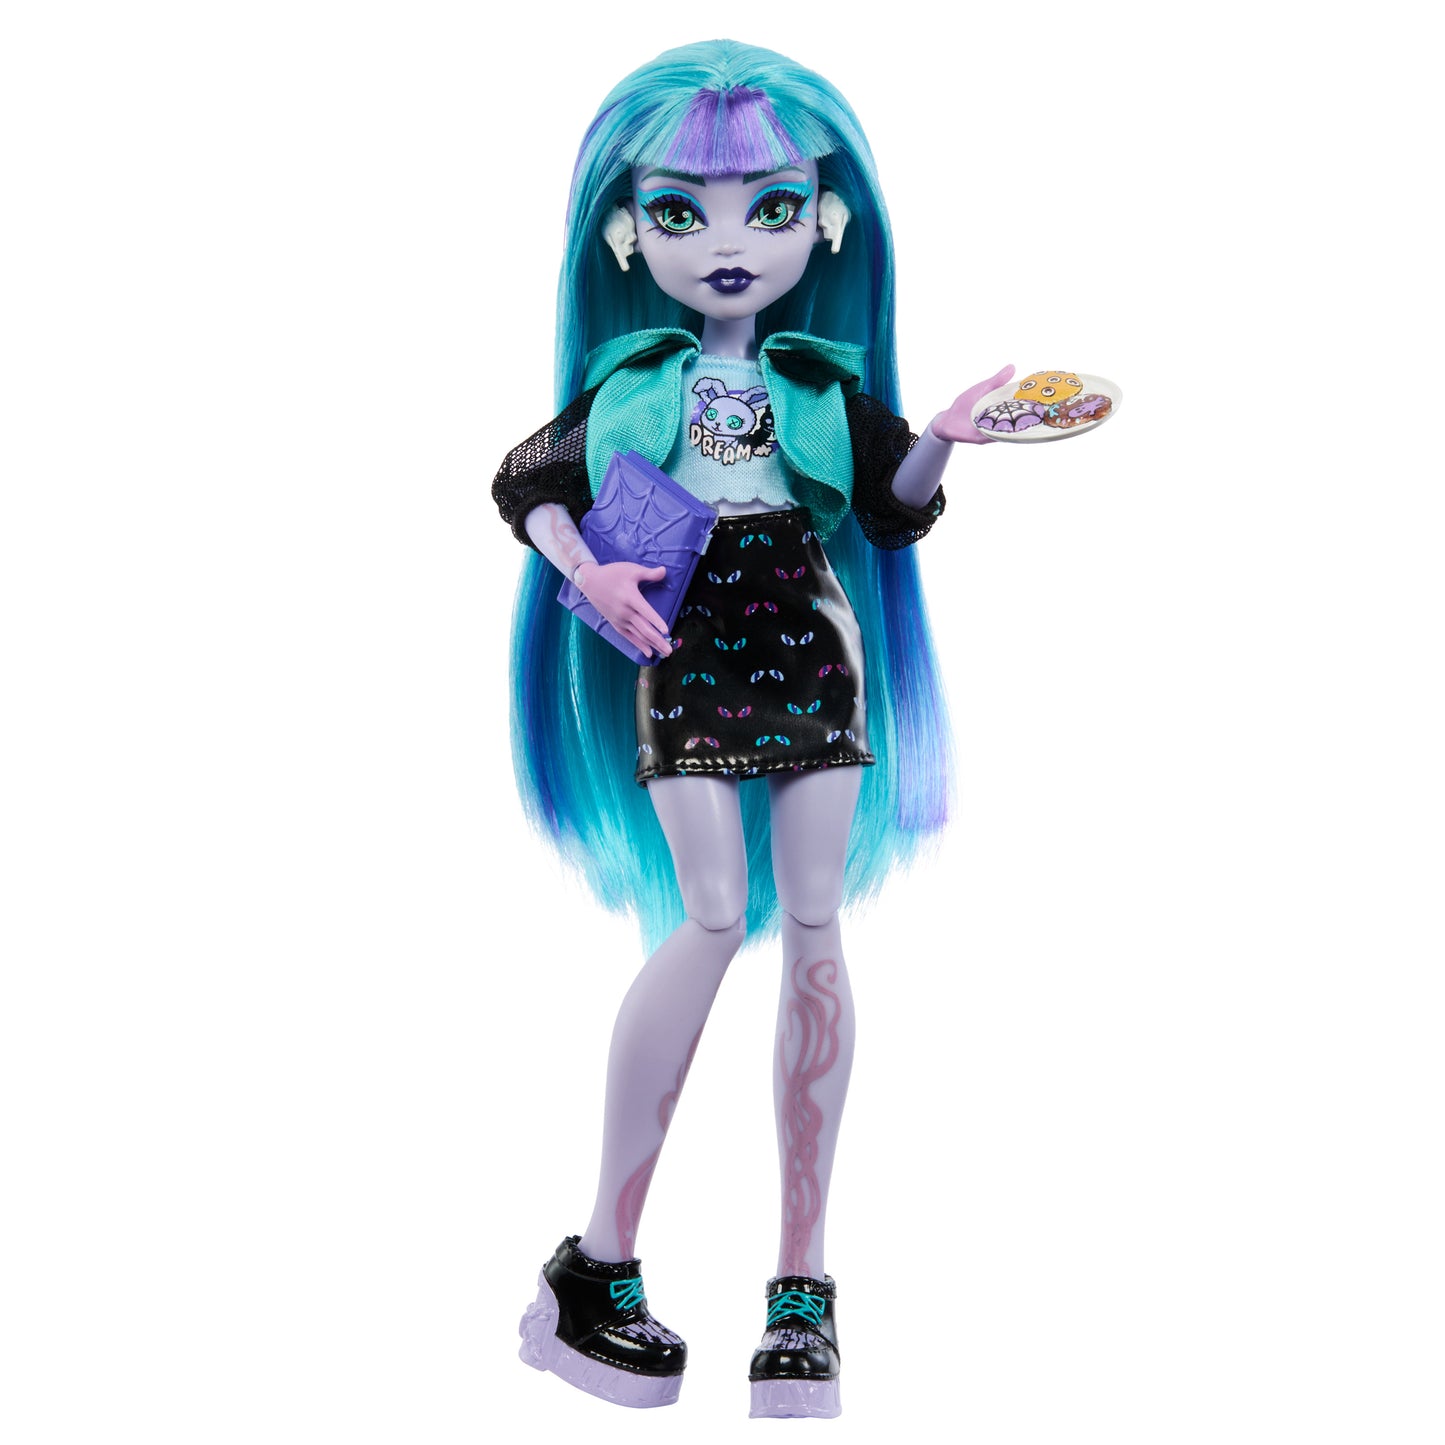 Monster High Skullmate Secrets Neon Frights Twyla Docka 25cm